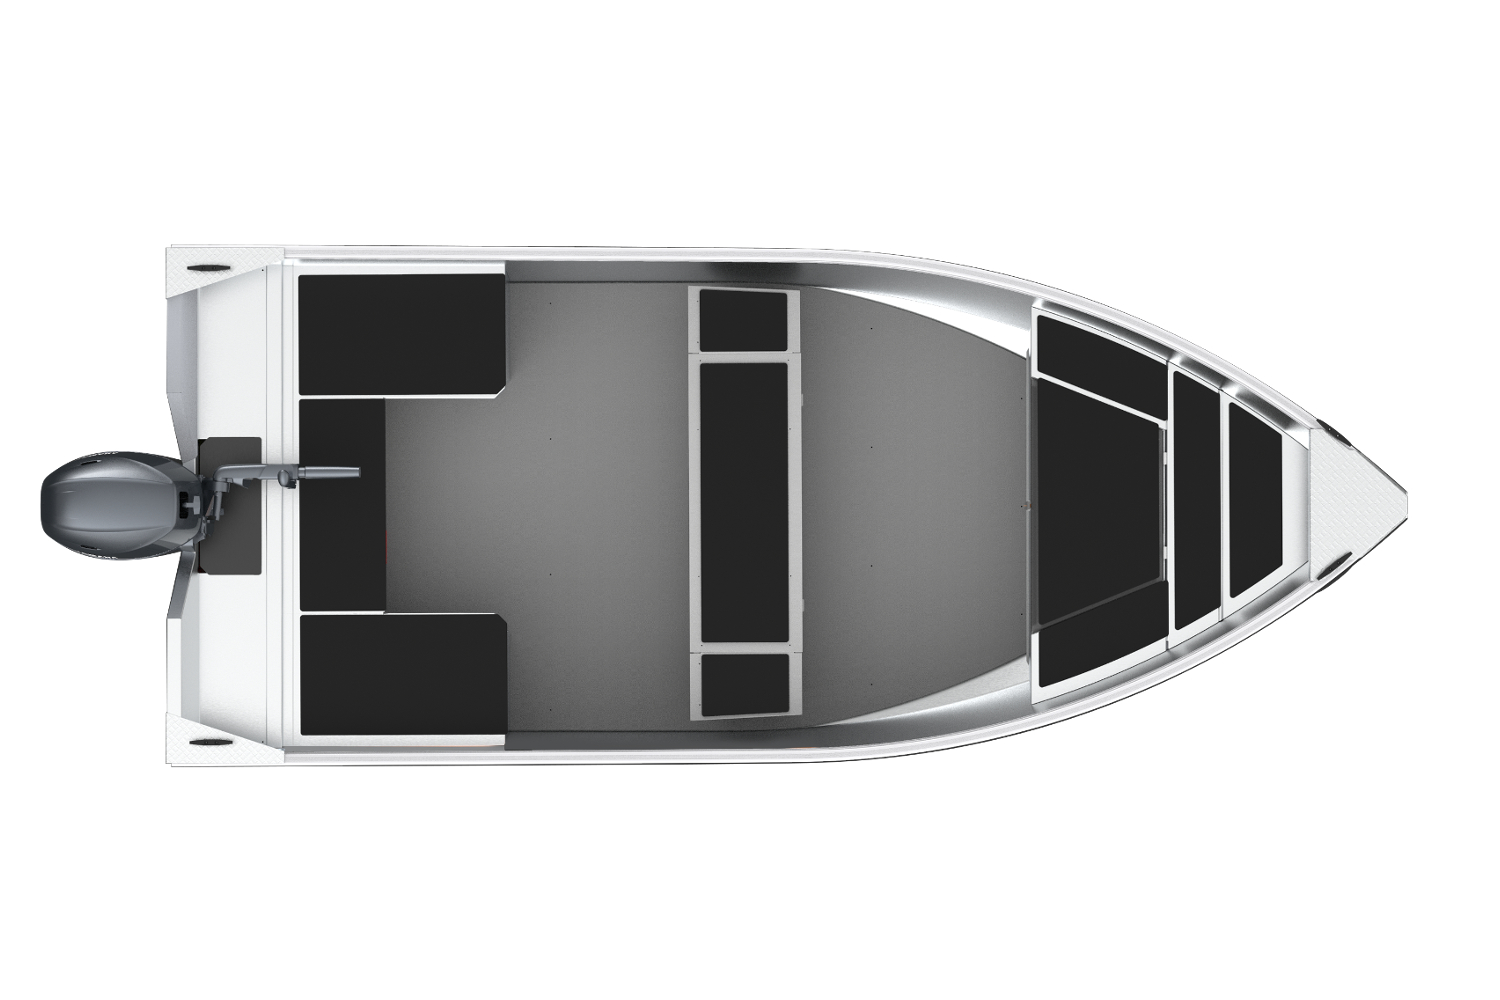 BUSTER XS, Алюминиевая лодка Buster, Алюминиевая лодка Buster XS, Aluminium boat BUSTER XS, Алюмінієвий човен Buster XS, Алюминиевый катер Buster XS